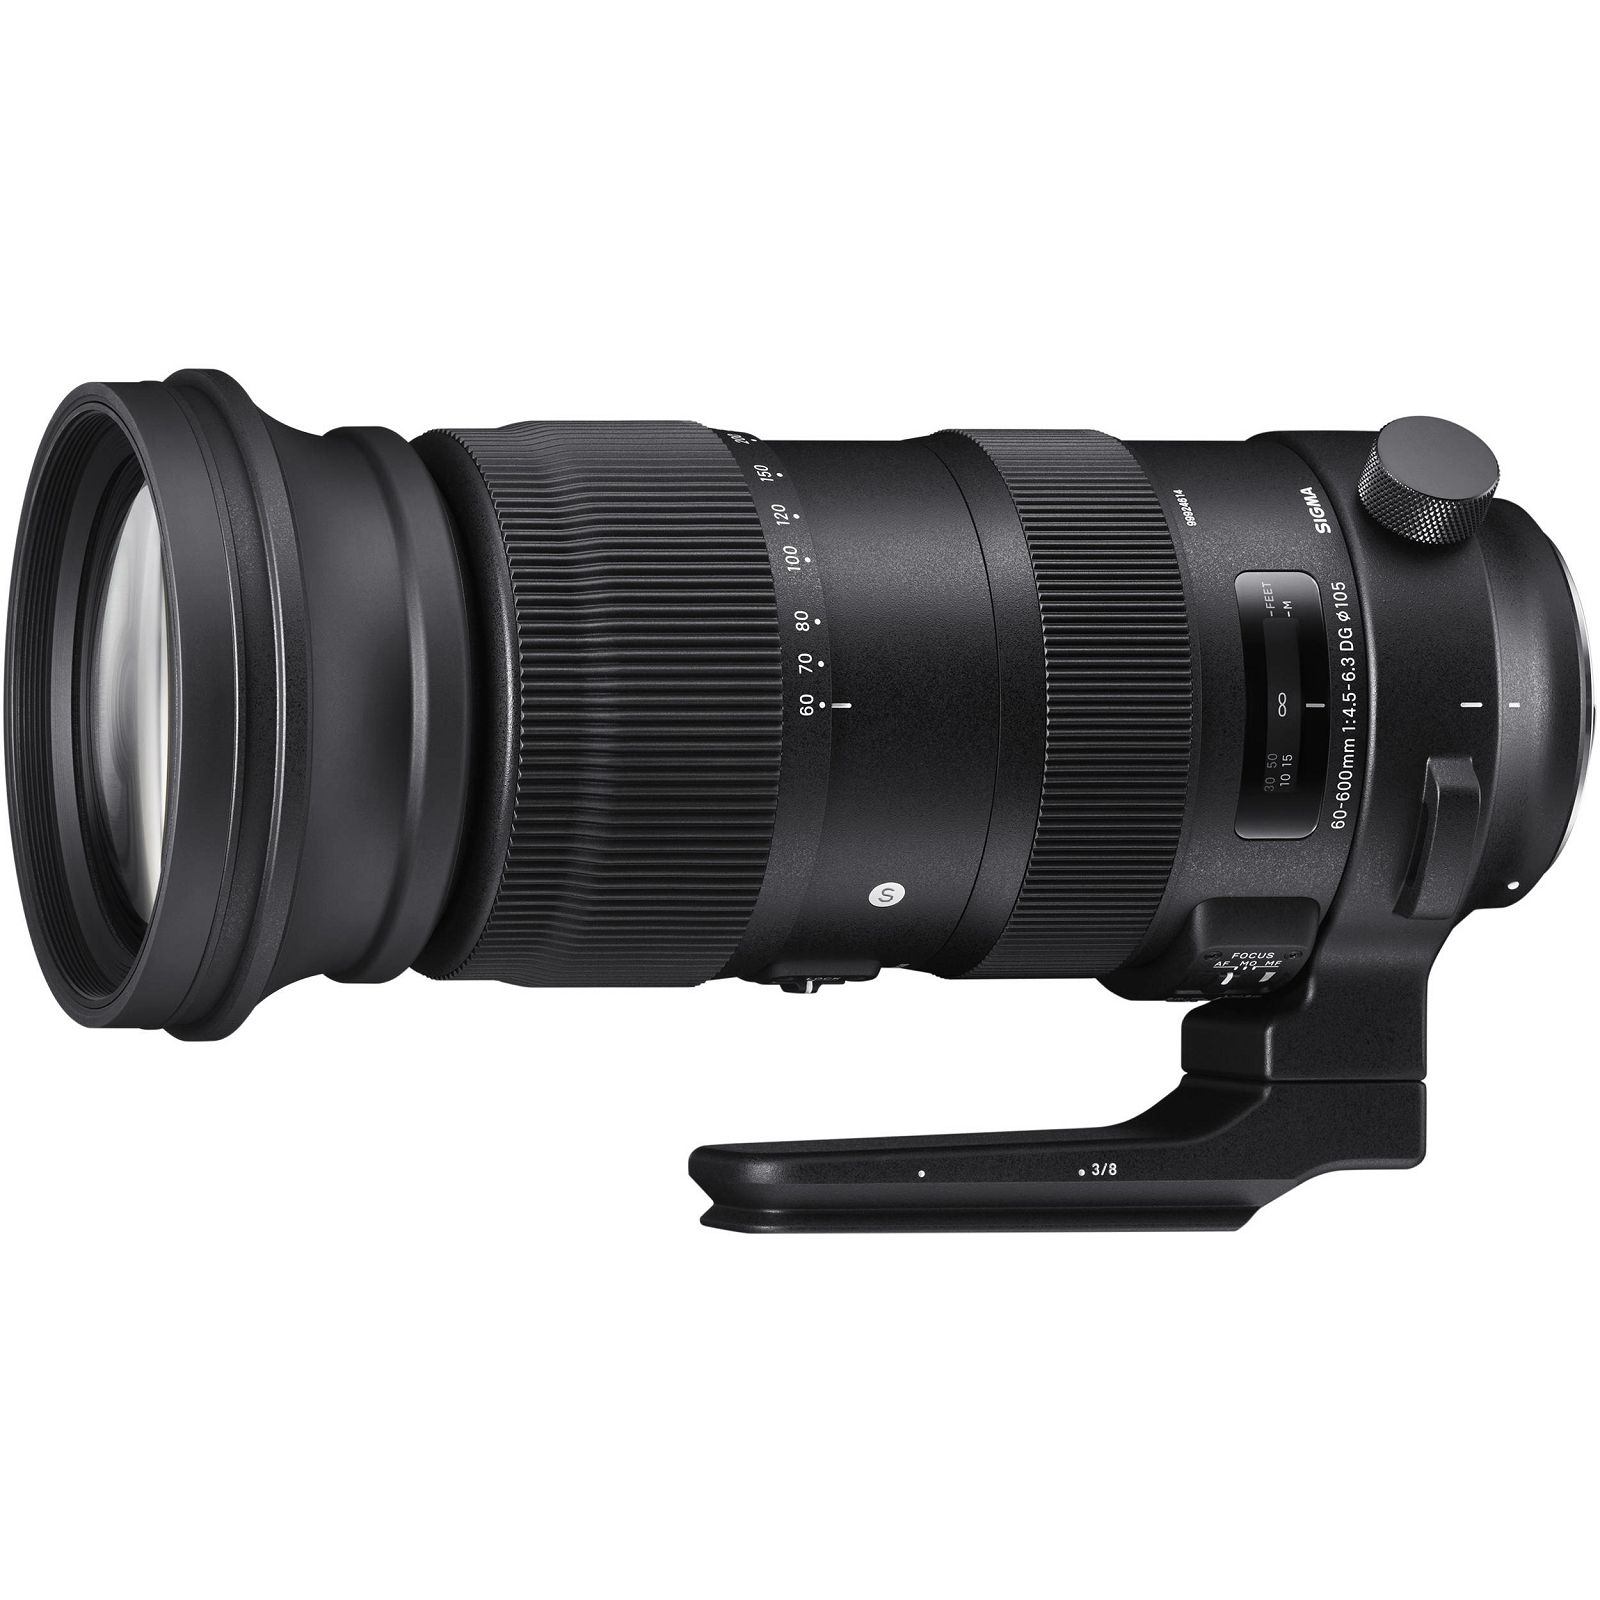 Sigma 60-600mm f/4.5-6.3 DG OS HSM Sport AF telefoto objektiv za Canon EF (SI730-954)